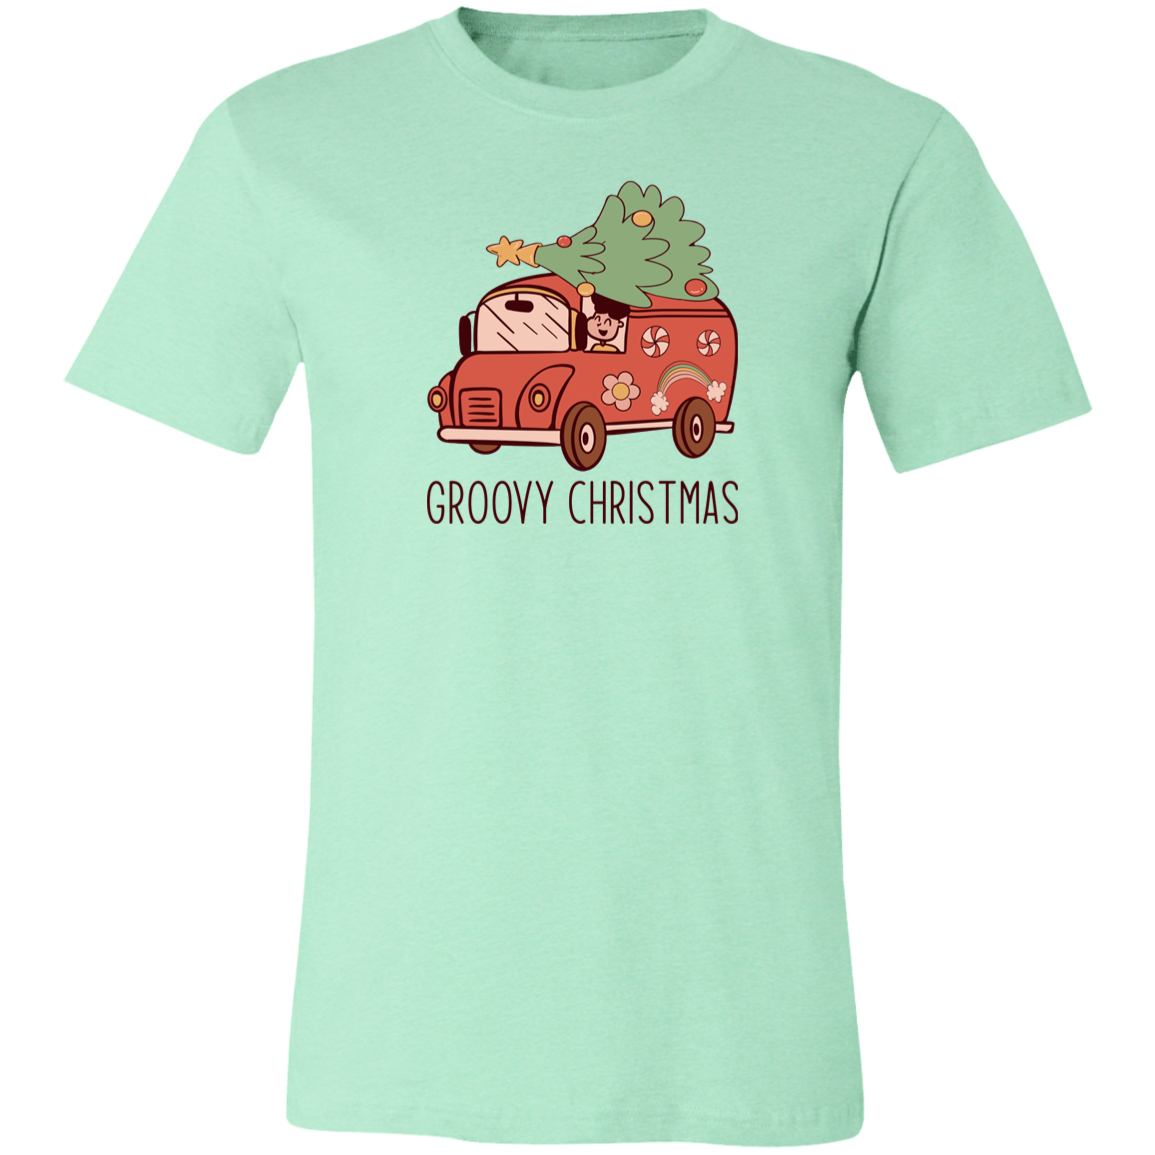 Groovy Christmas Shirt